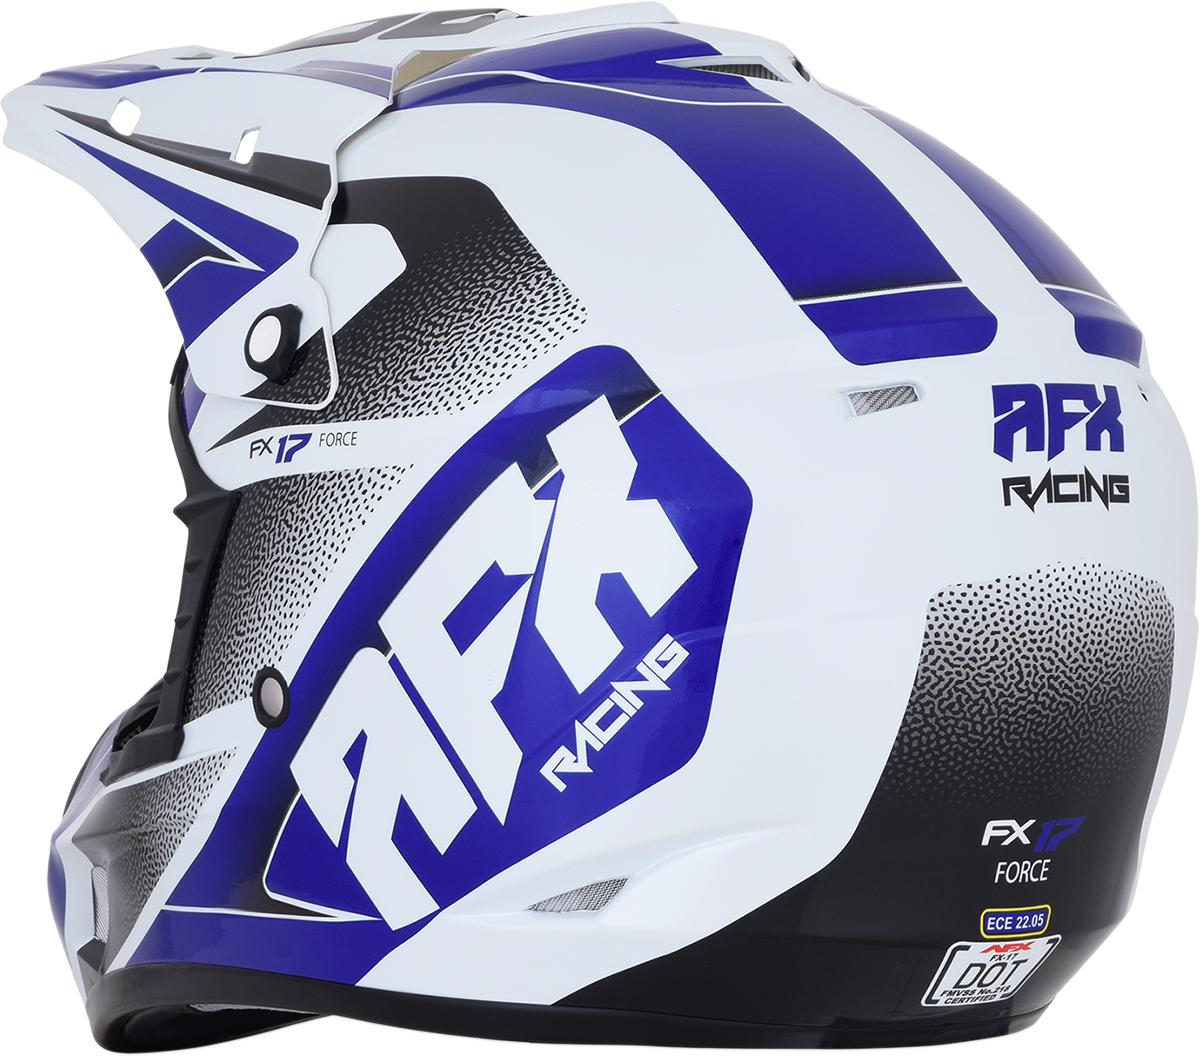 Casco AFX FX-17 - Force - Blanco perla/Azul - XL 0110-5241